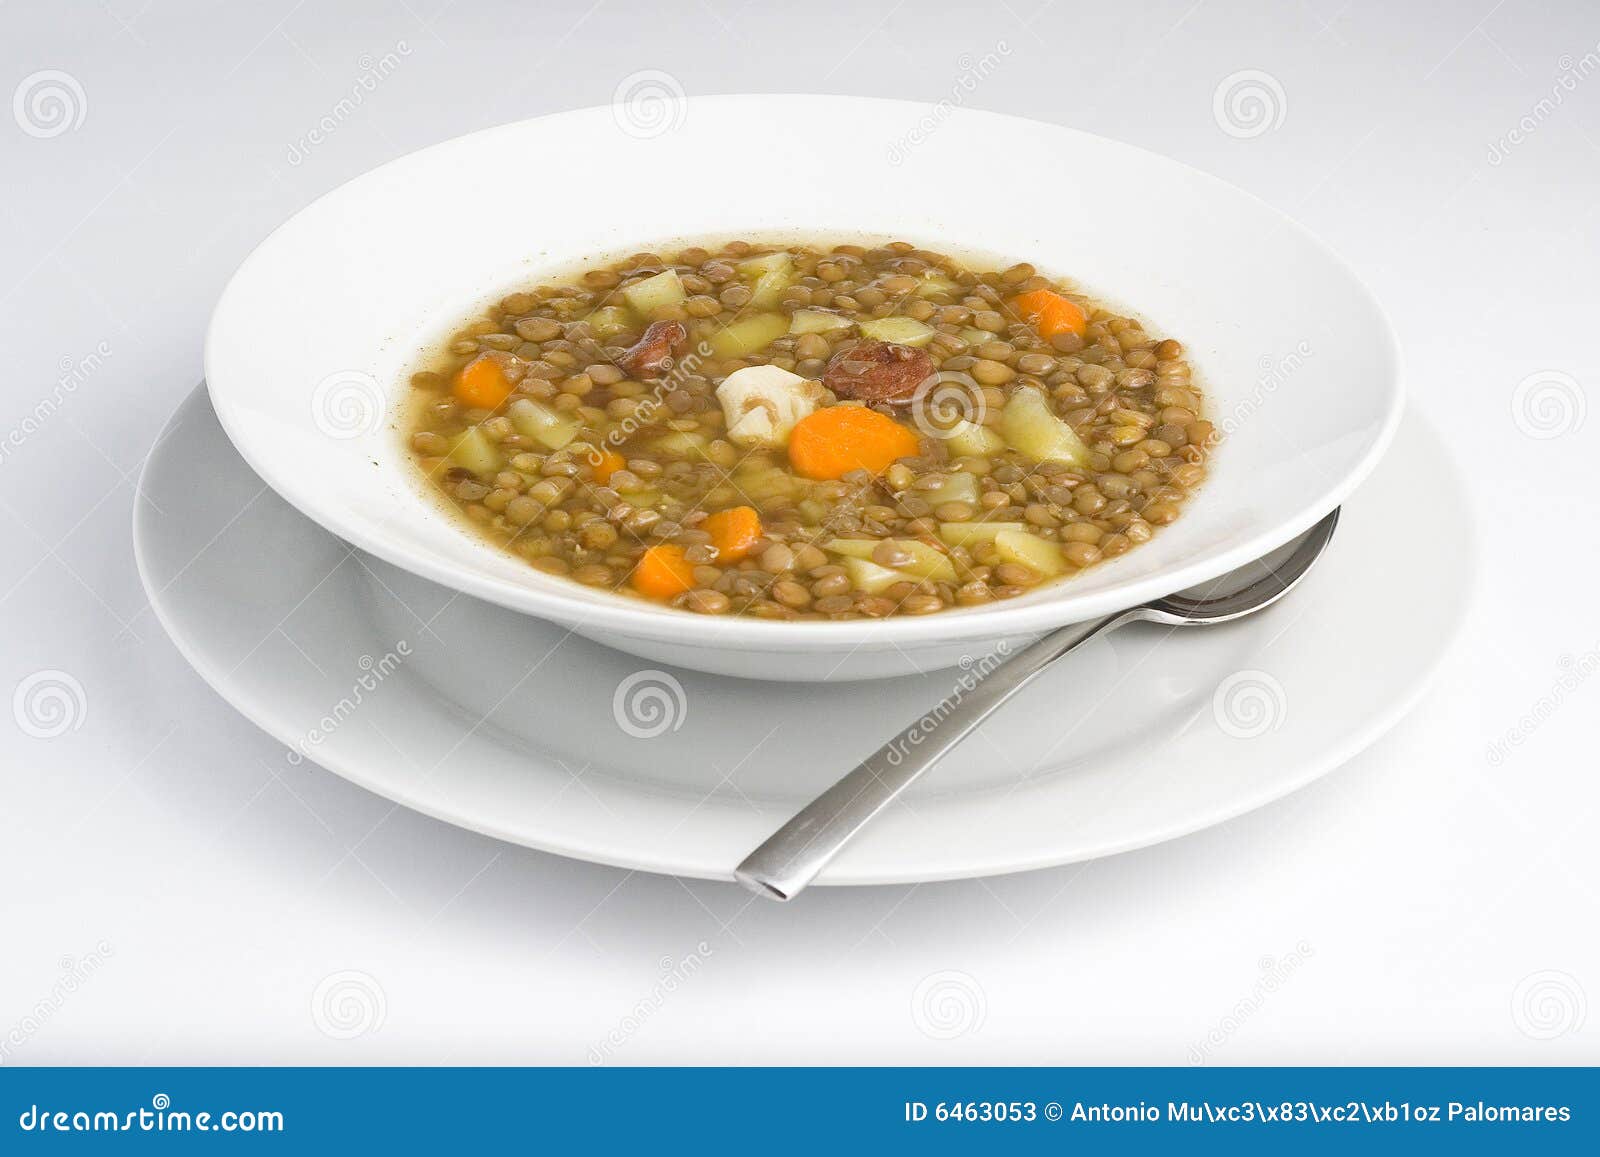 homemade hot dish of lentils